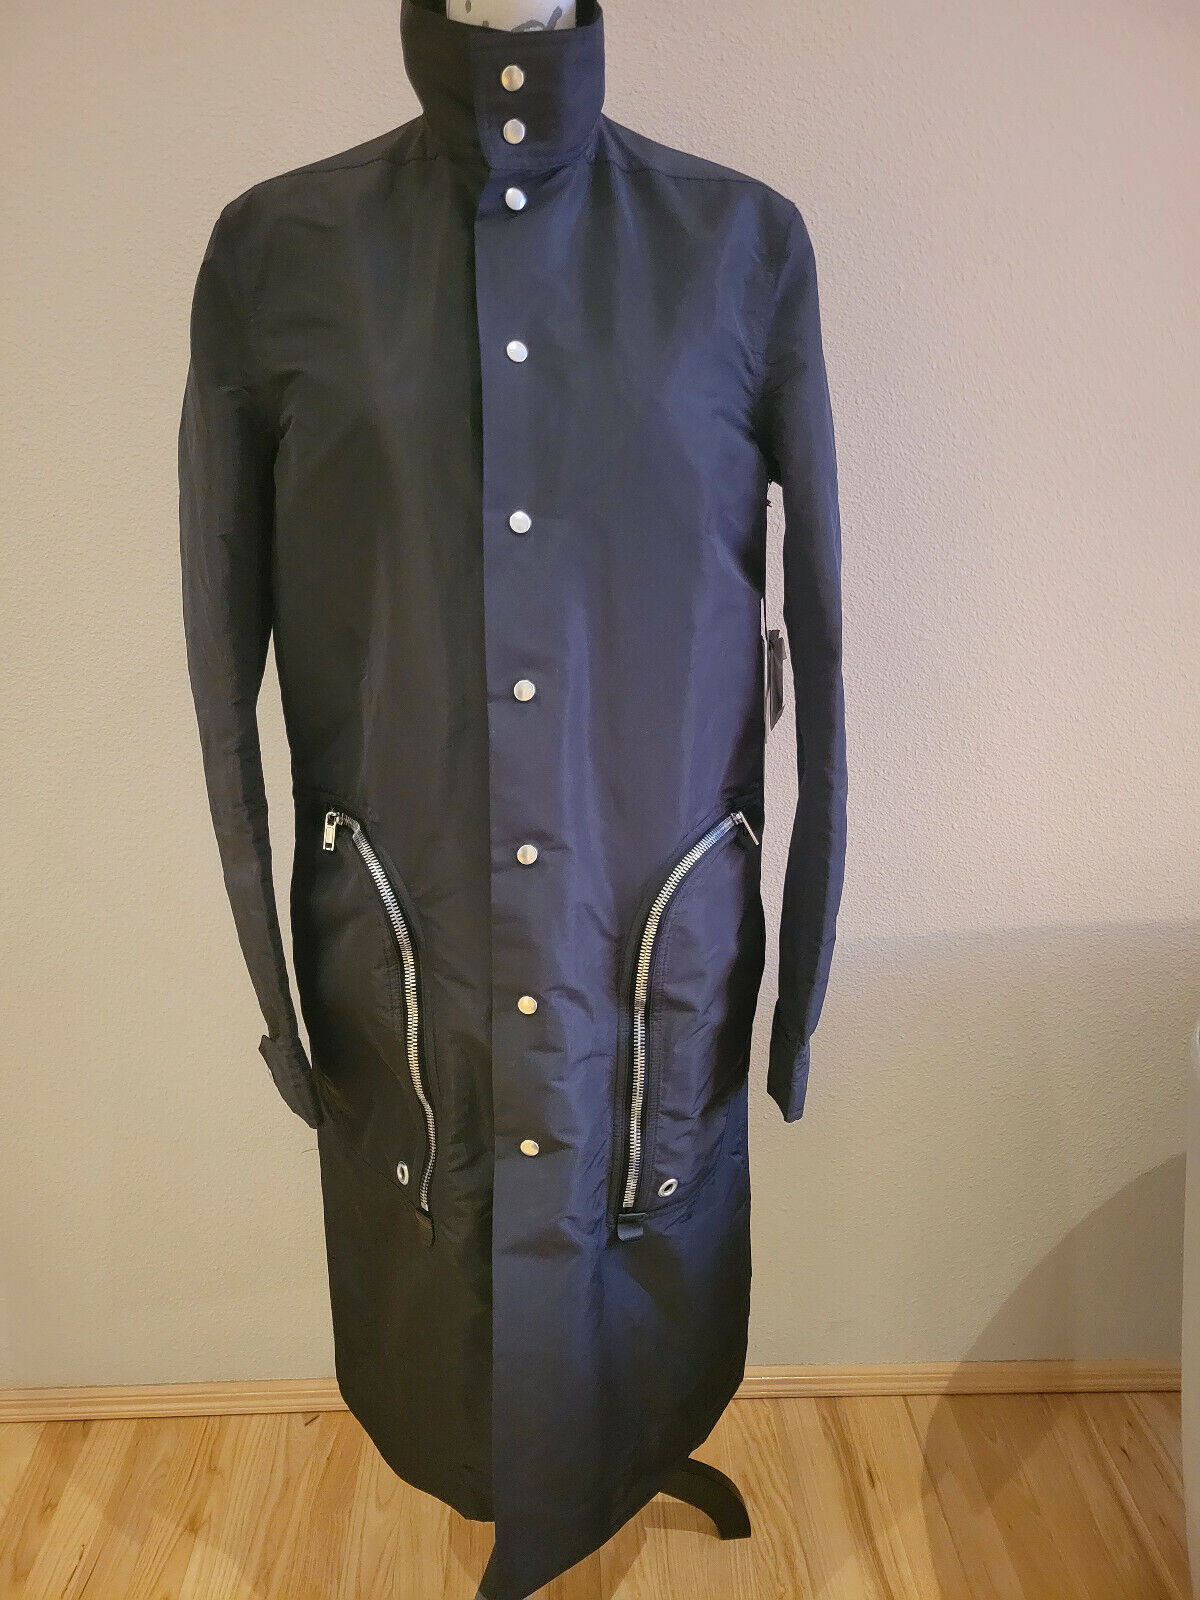 RICK OWENS Black Creatch Pealab Coat Jacket - made in Italy - BNWT